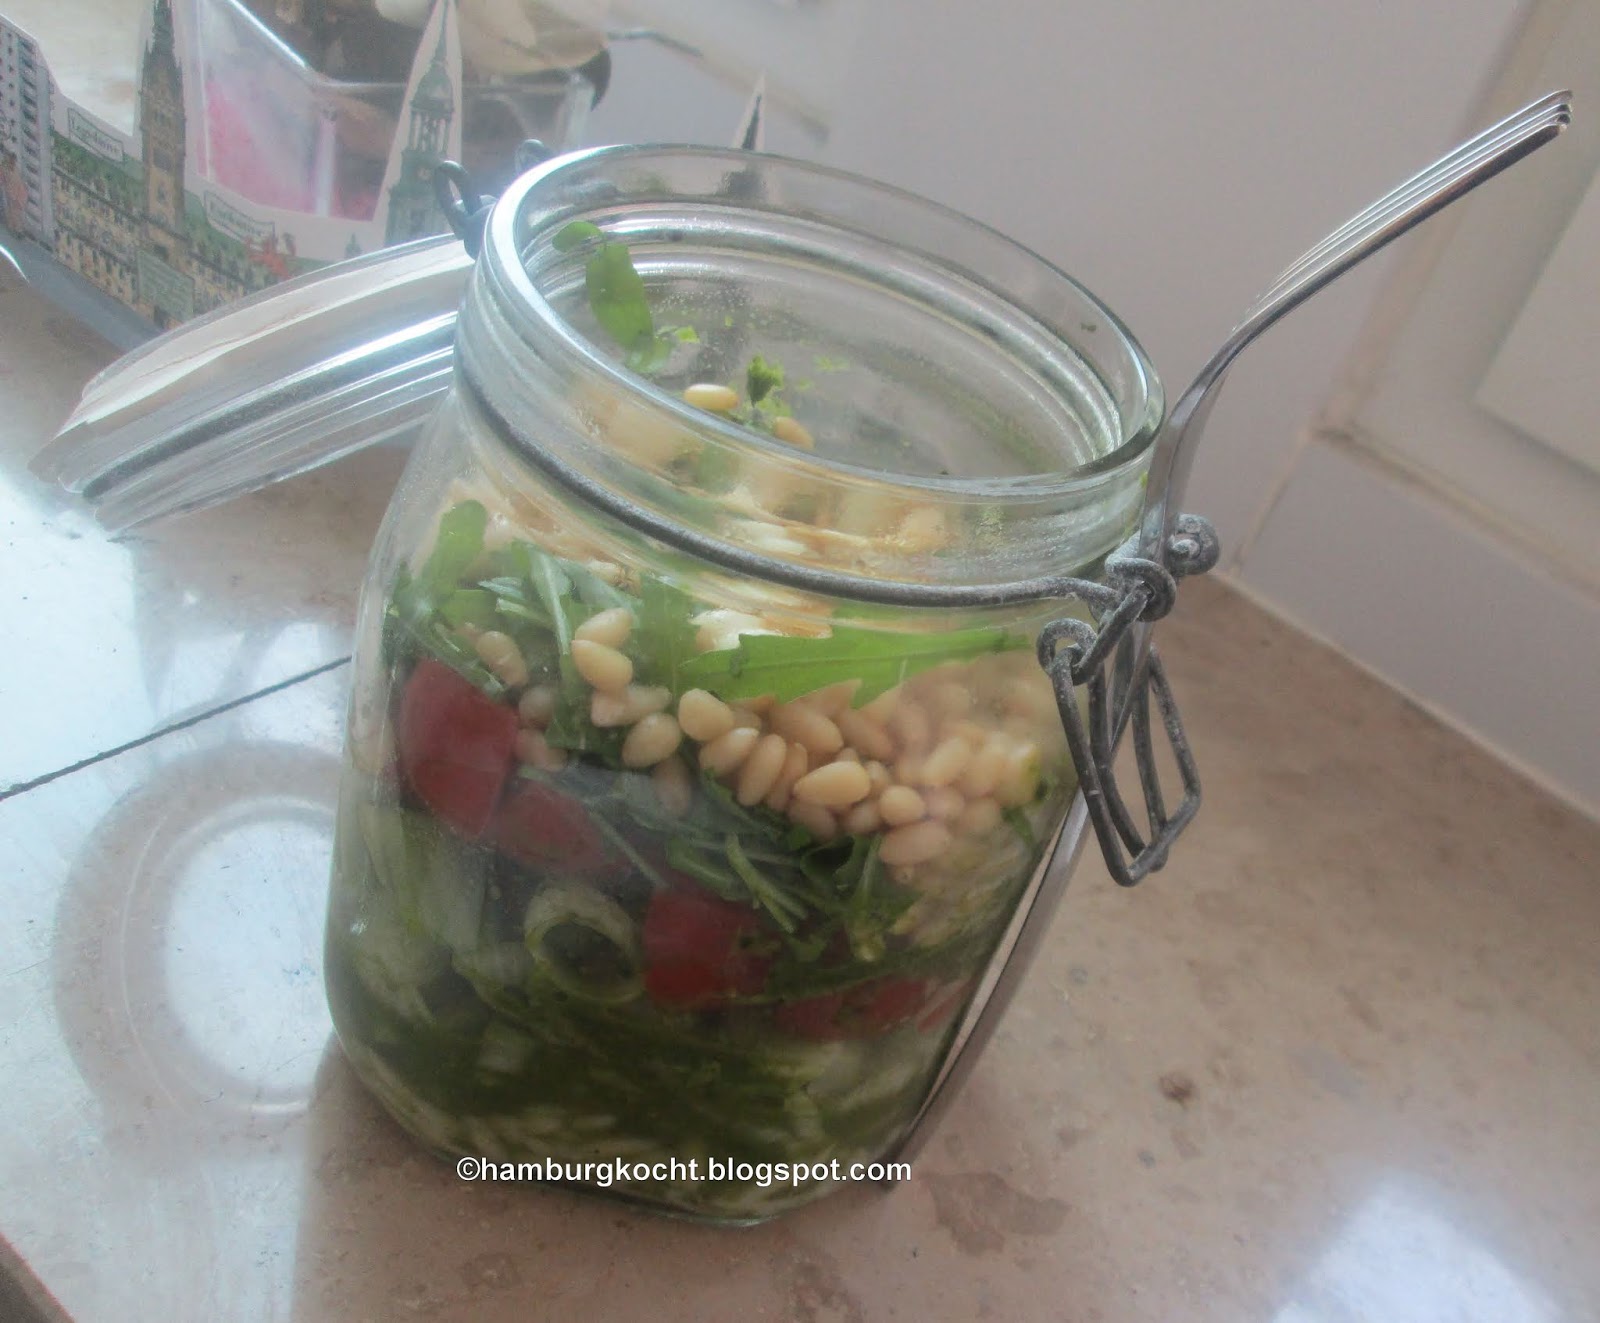 Hamburg kocht!: Grüner Spargel-Nudel-Salat aus dem Glas